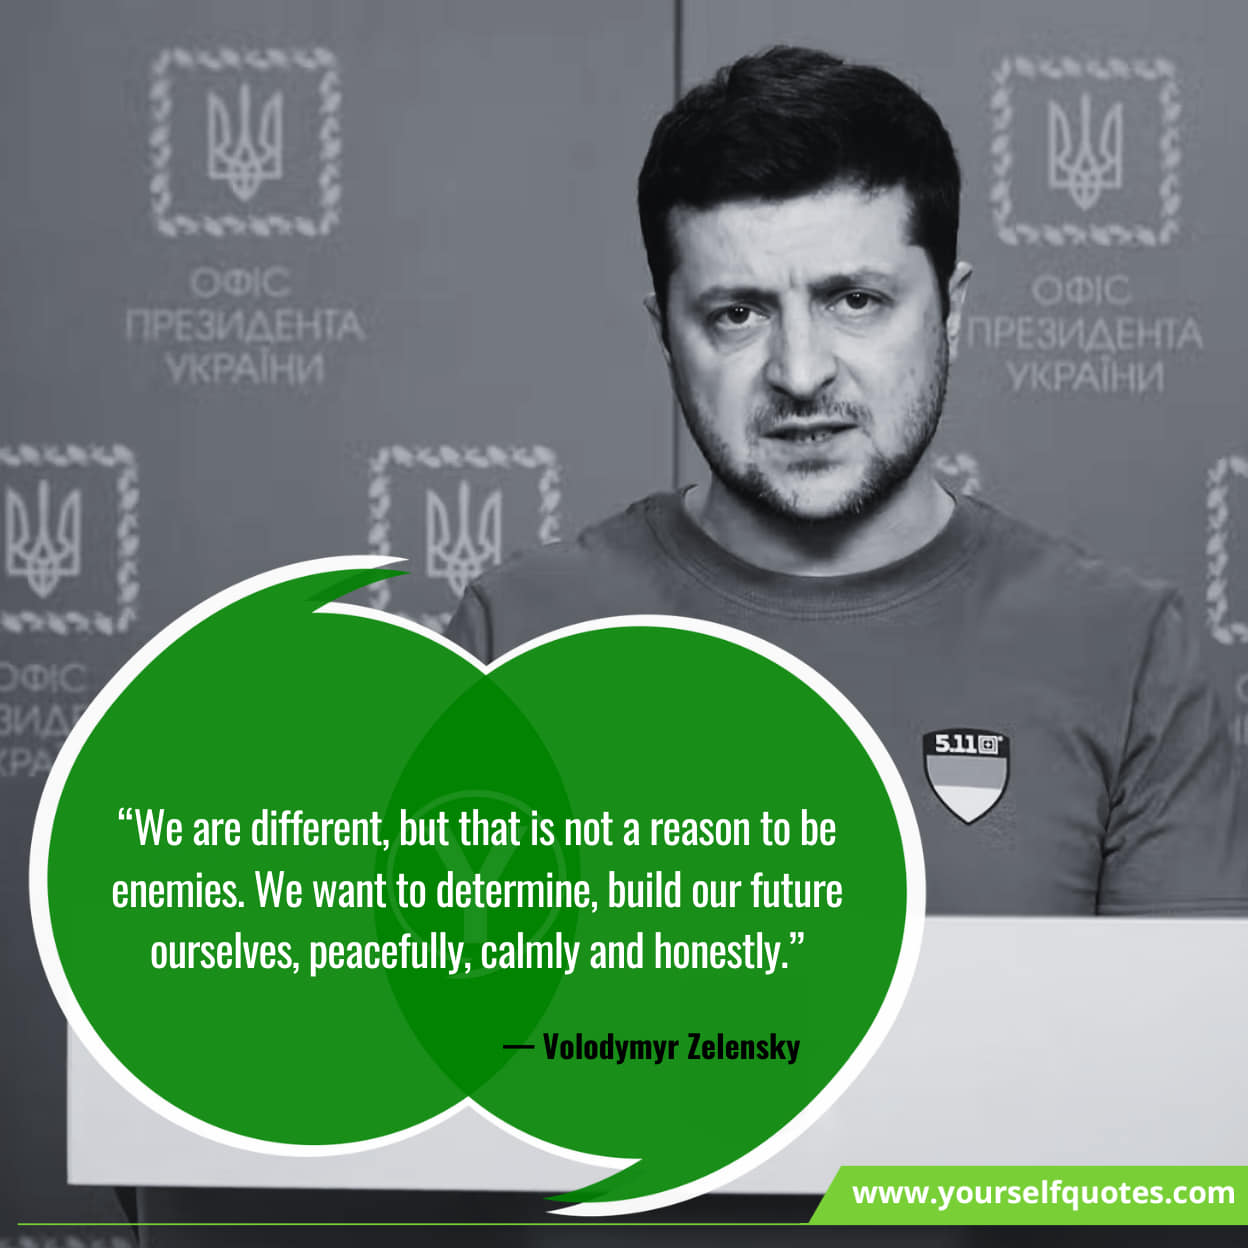 Volodymyr Zelensky Quotes About Ukraine